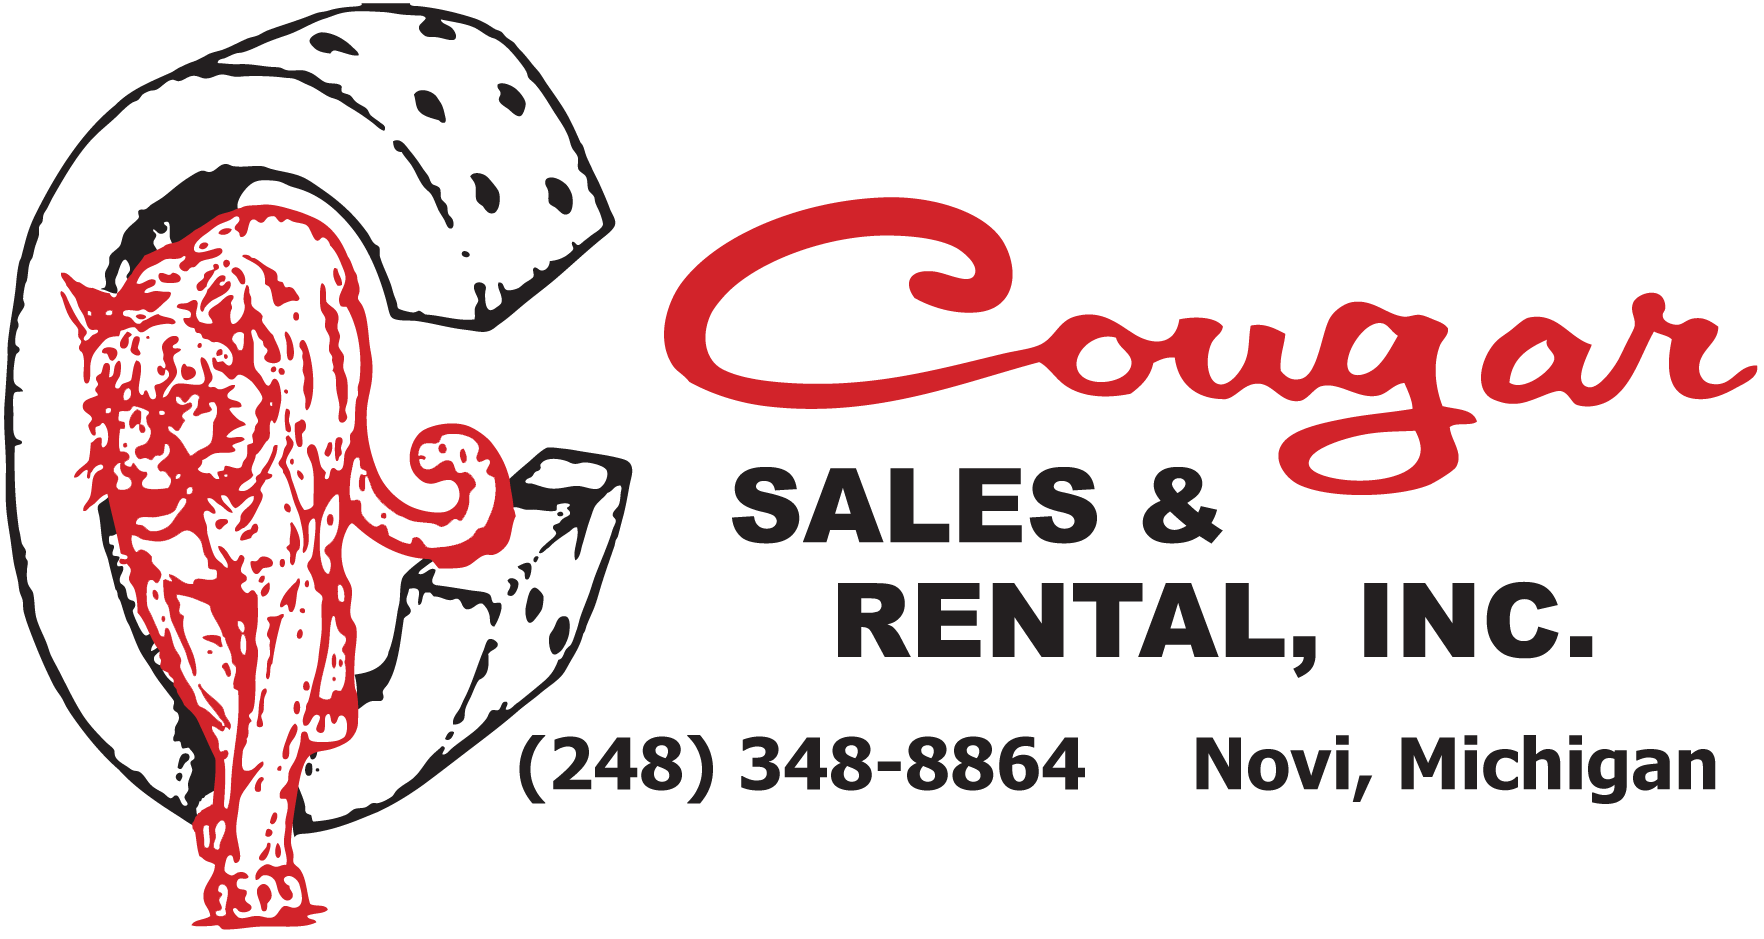 Cougar Sales & Rental Inc